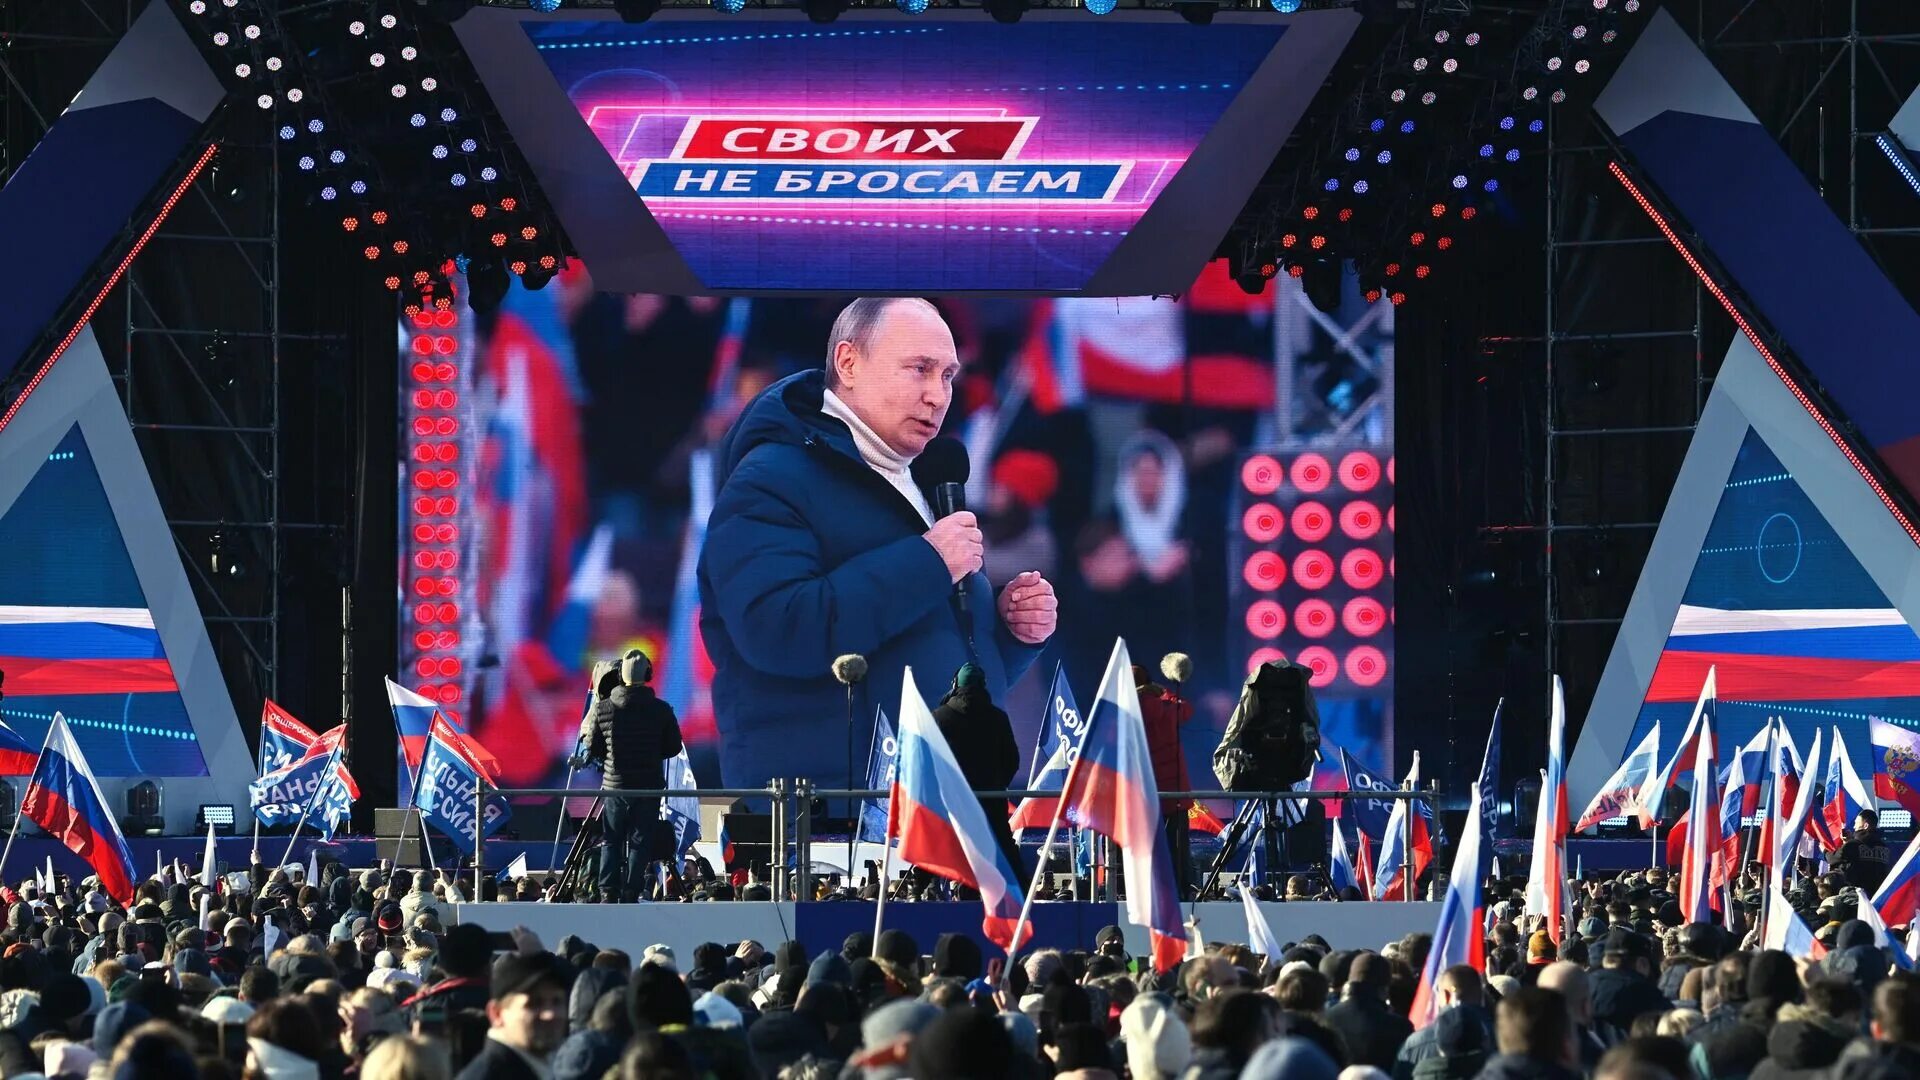 Сегодня. Путин в Лужниках 18 марта 2022. Путин на концерте в Лужниках 18 марта. Путин на митинге в Лужниках 2022. Концерт Путина в Лужниках 2022.